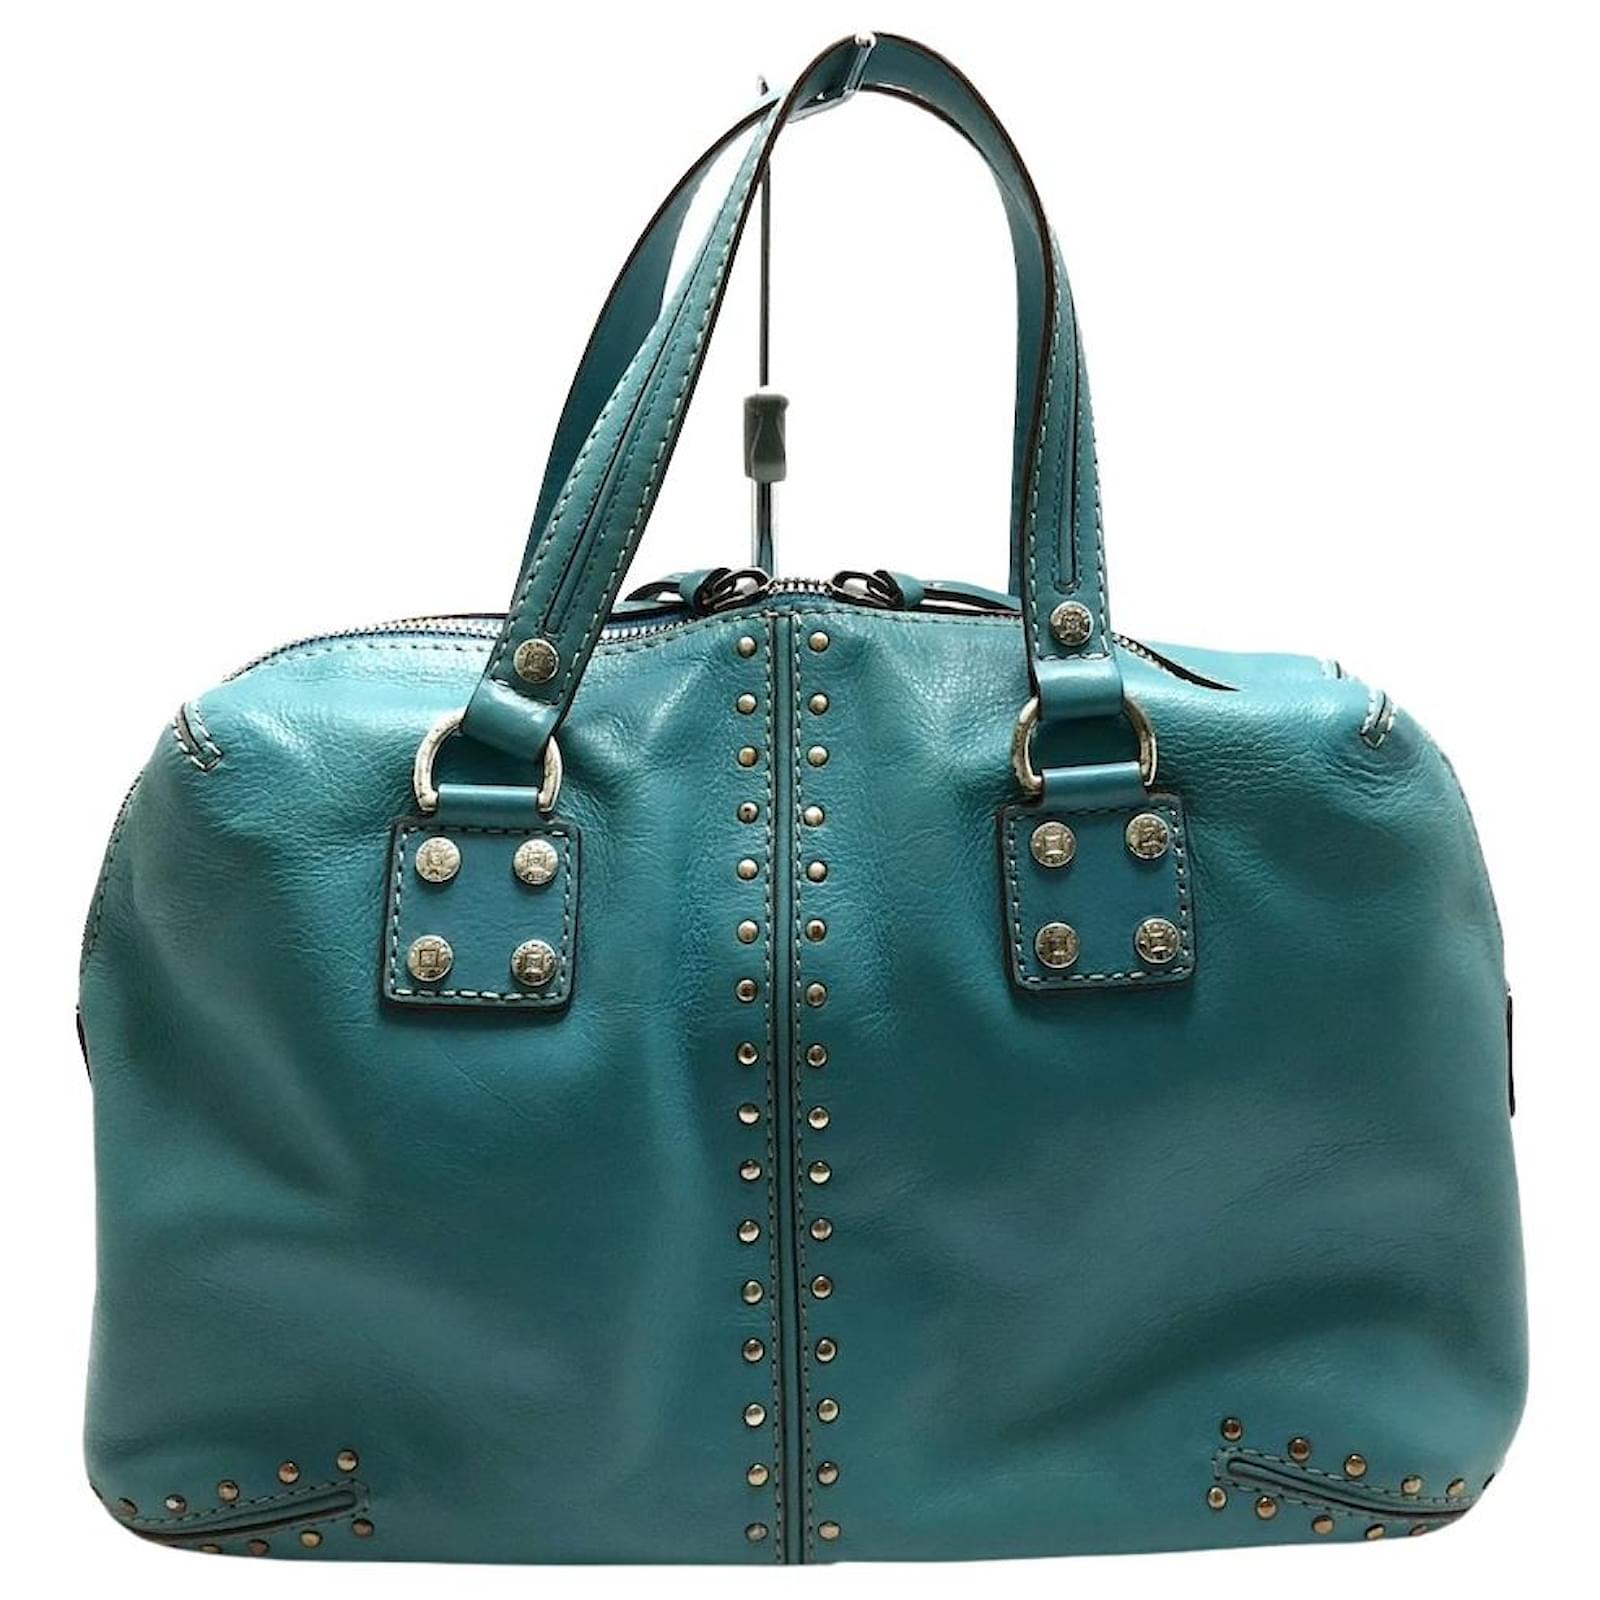 light blue leather michael kors handbags